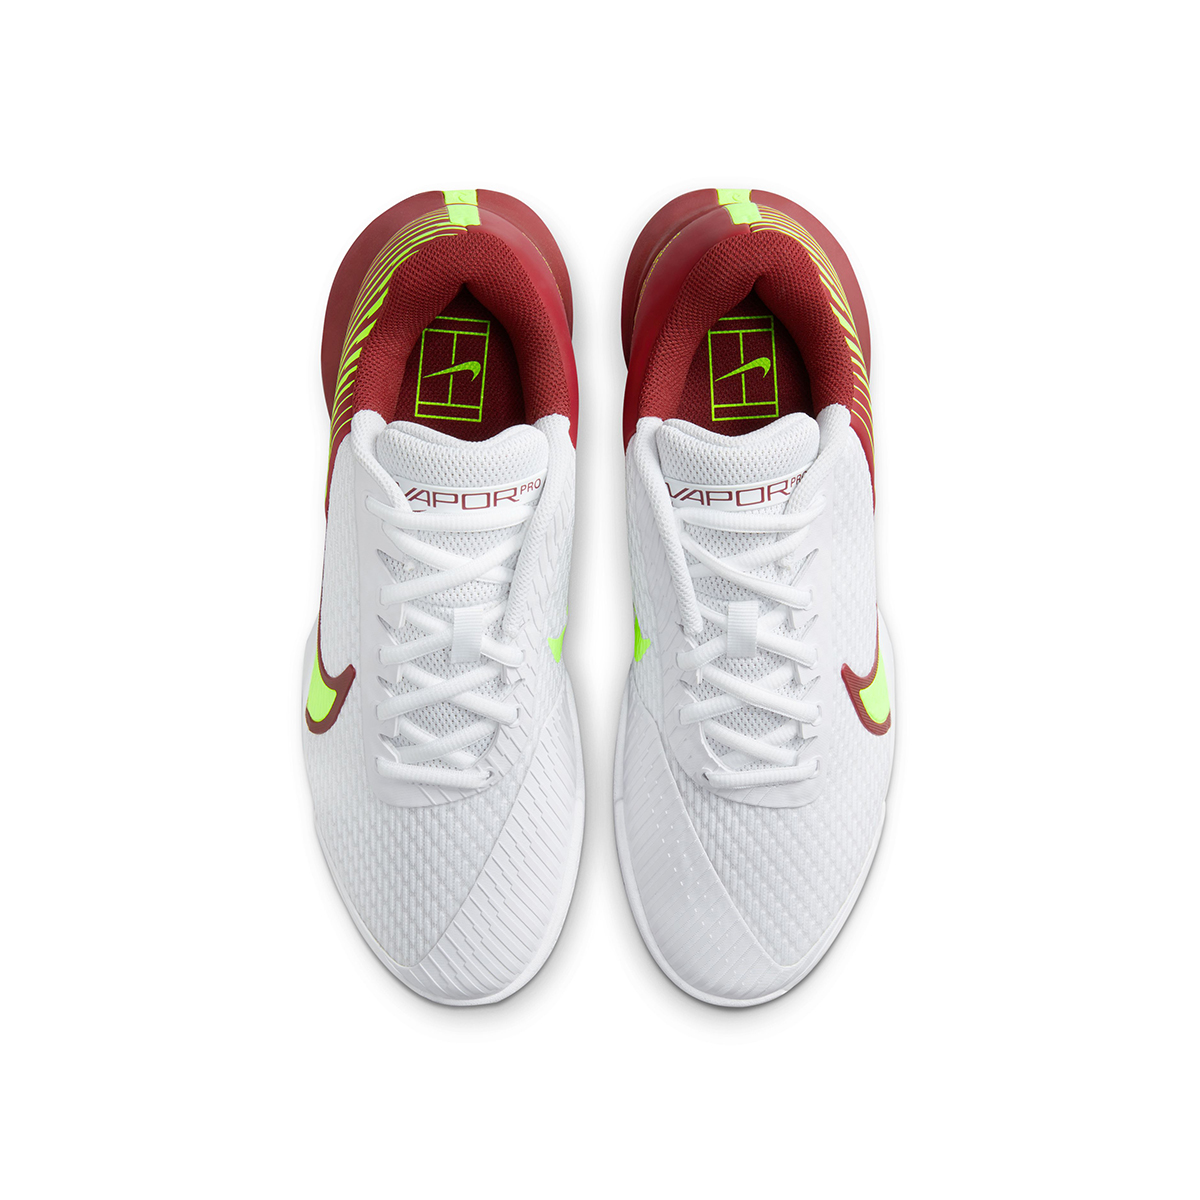 Zapatillas Tenis Nike Court Air Zoom Vapor Pro 2 Es Hombre,  image number null